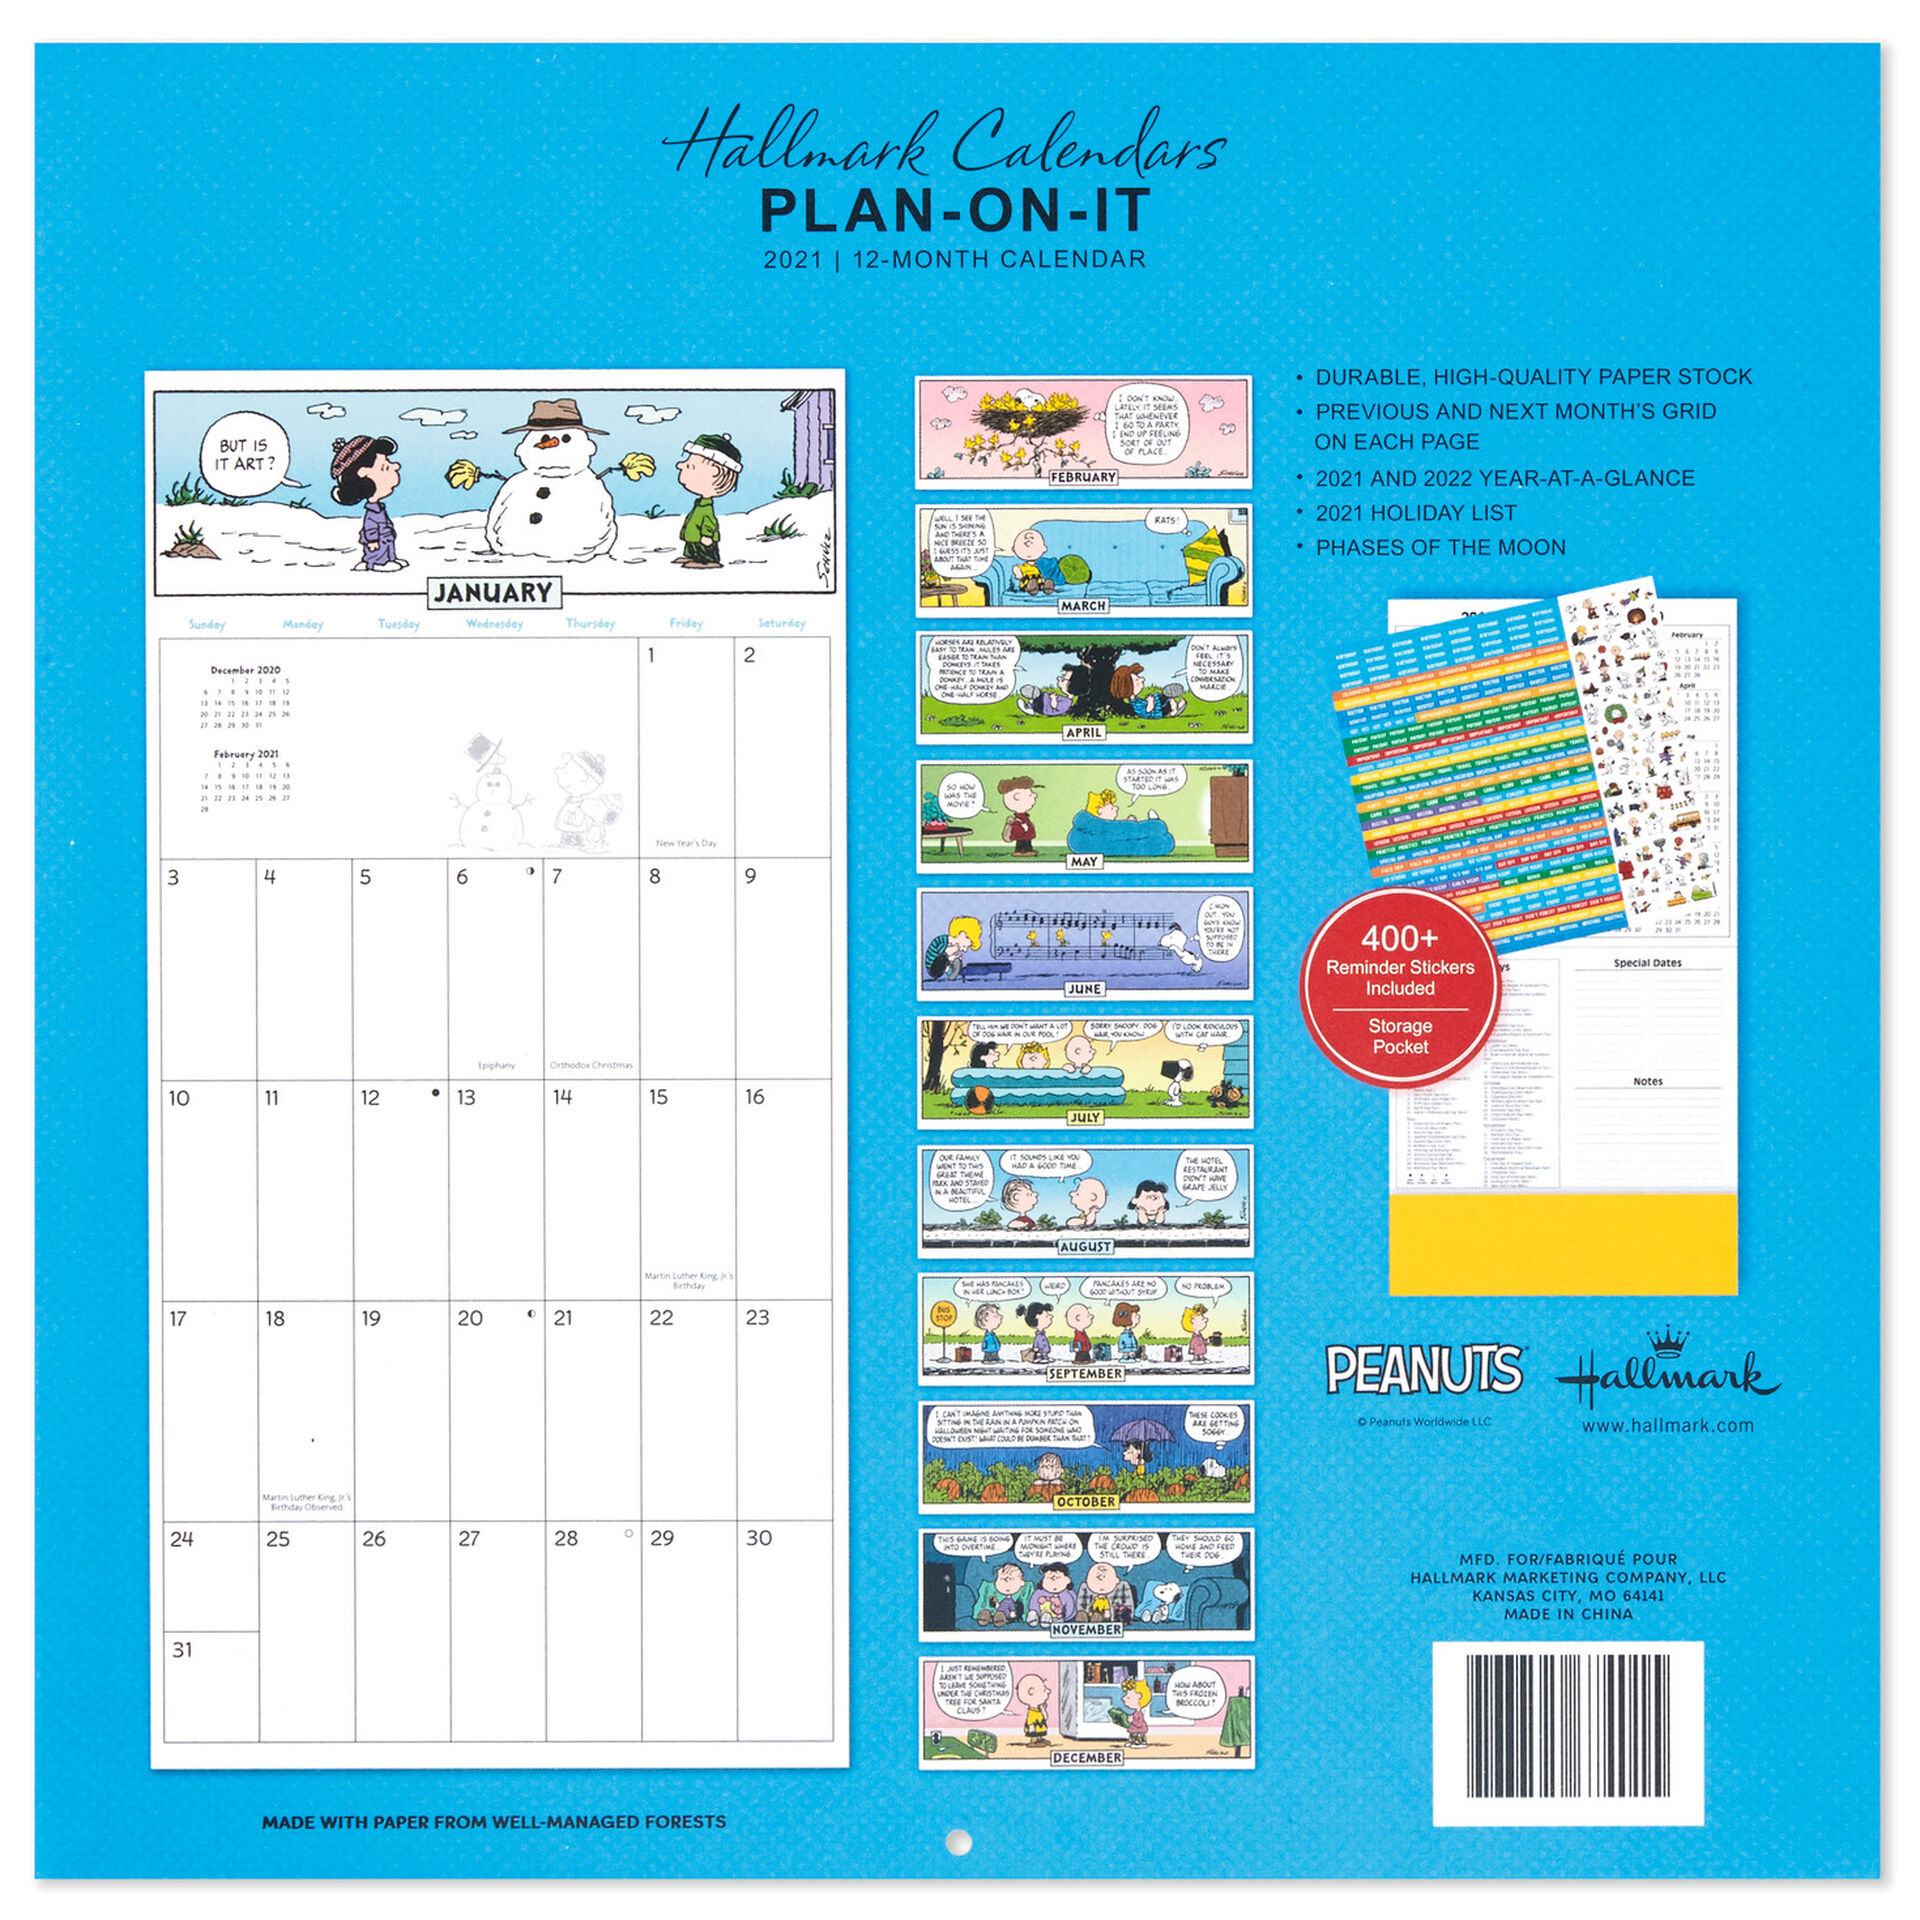 hallmark calendar 2021 Peanuts Large Grid 2021 Wall Calendar With Stickers 12 Month Calendars Planners Hallmark hallmark calendar 2021